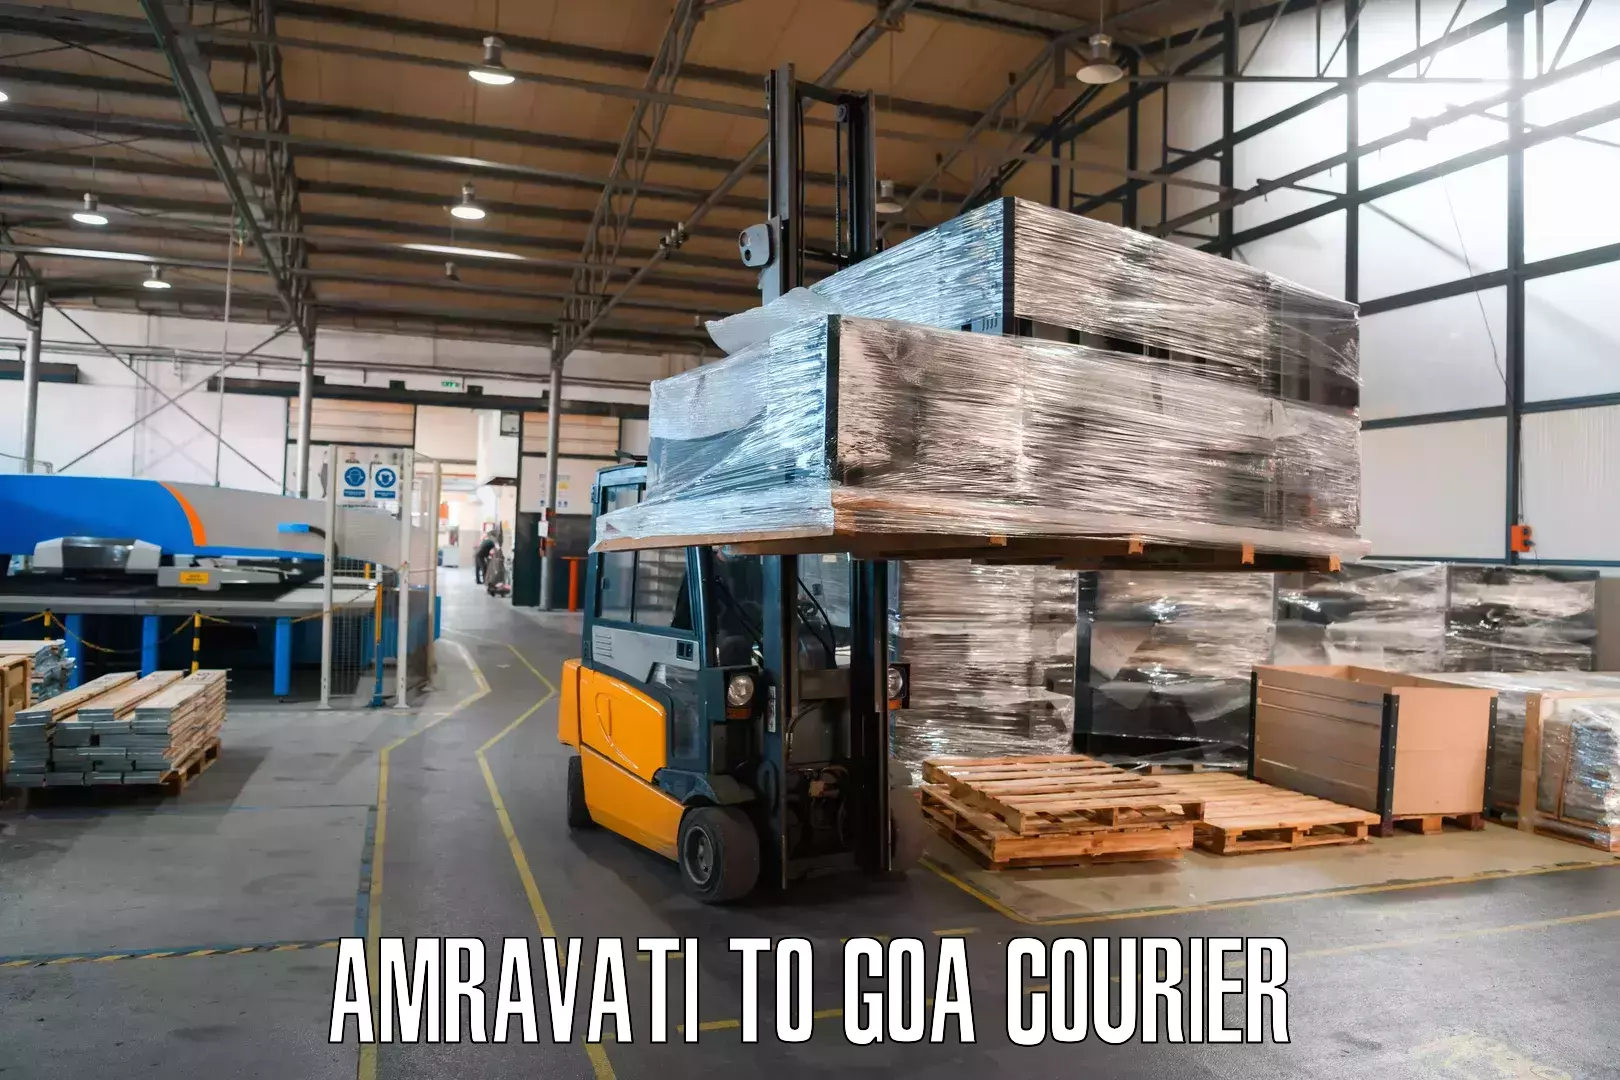 Courier service innovation Amravati to South Goa